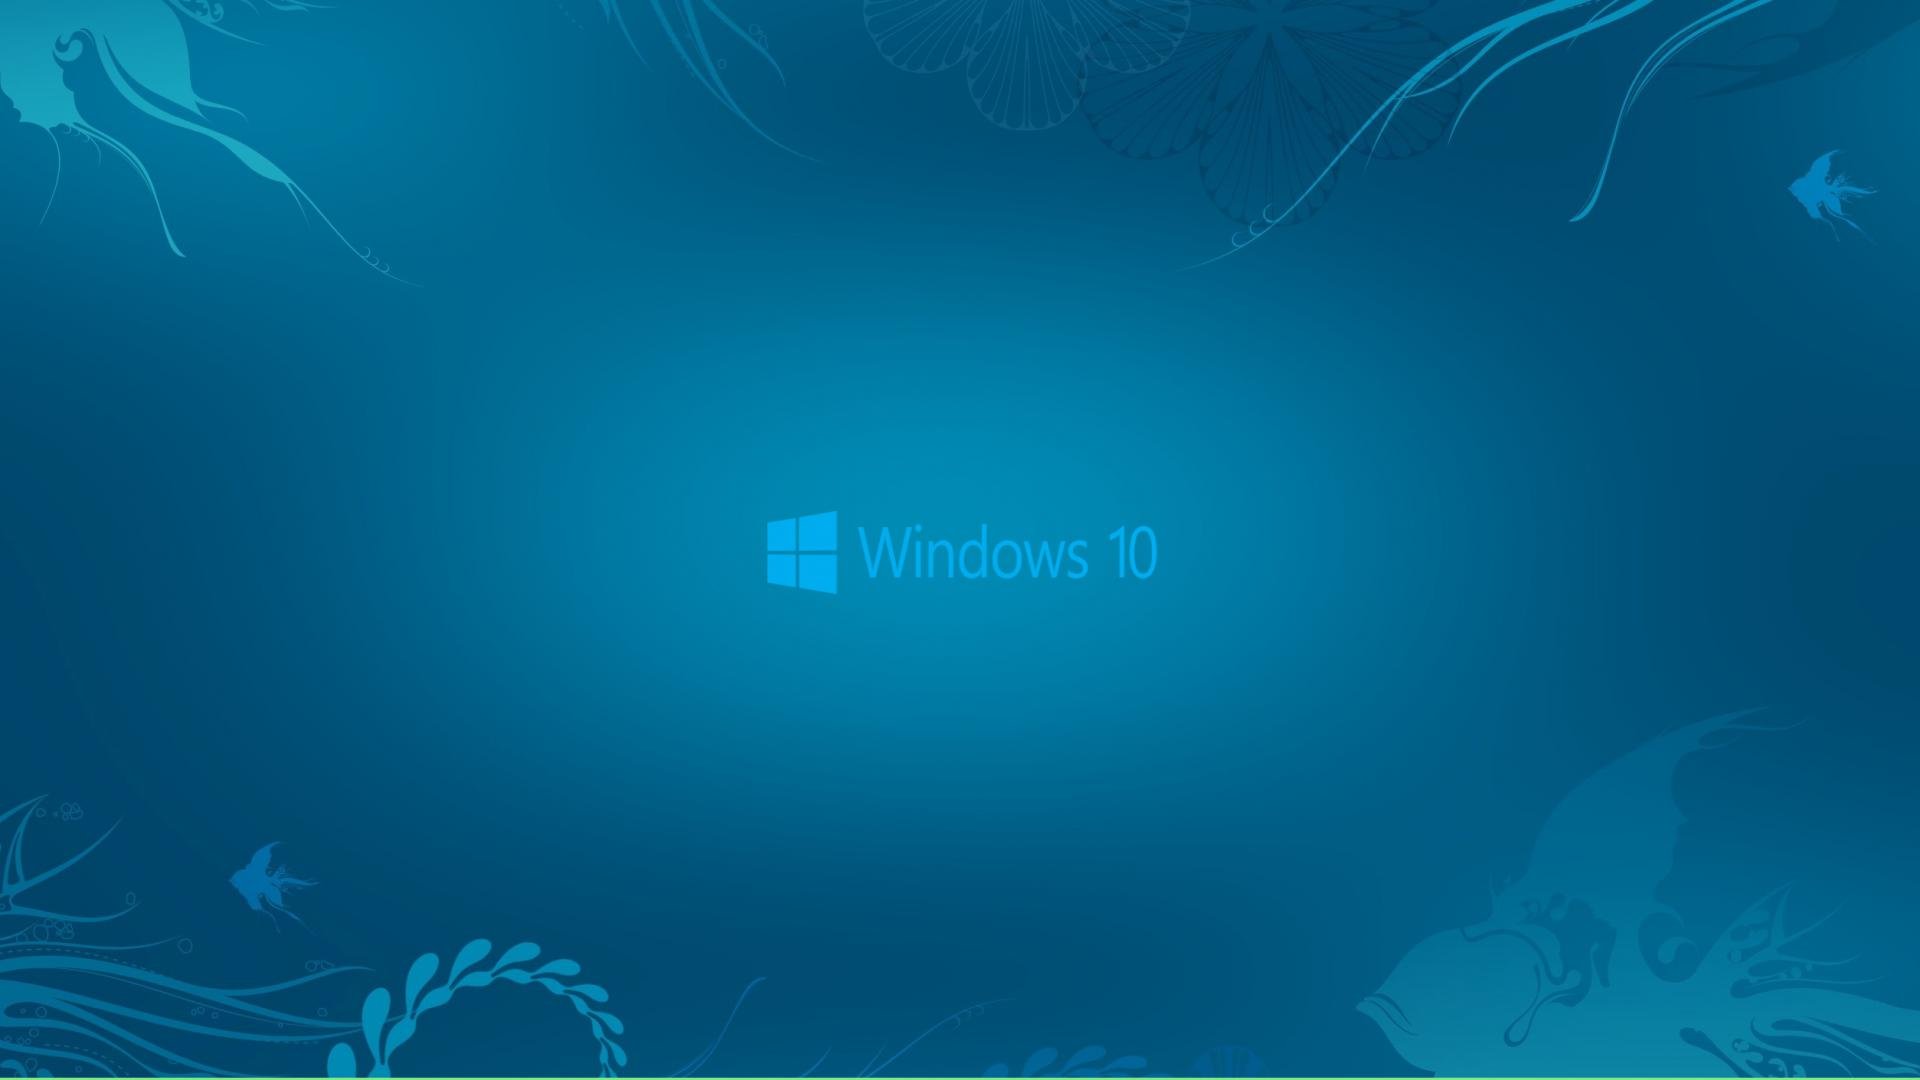 Tags Free Windows 10 wallpaper Windows 10 background Windows 10